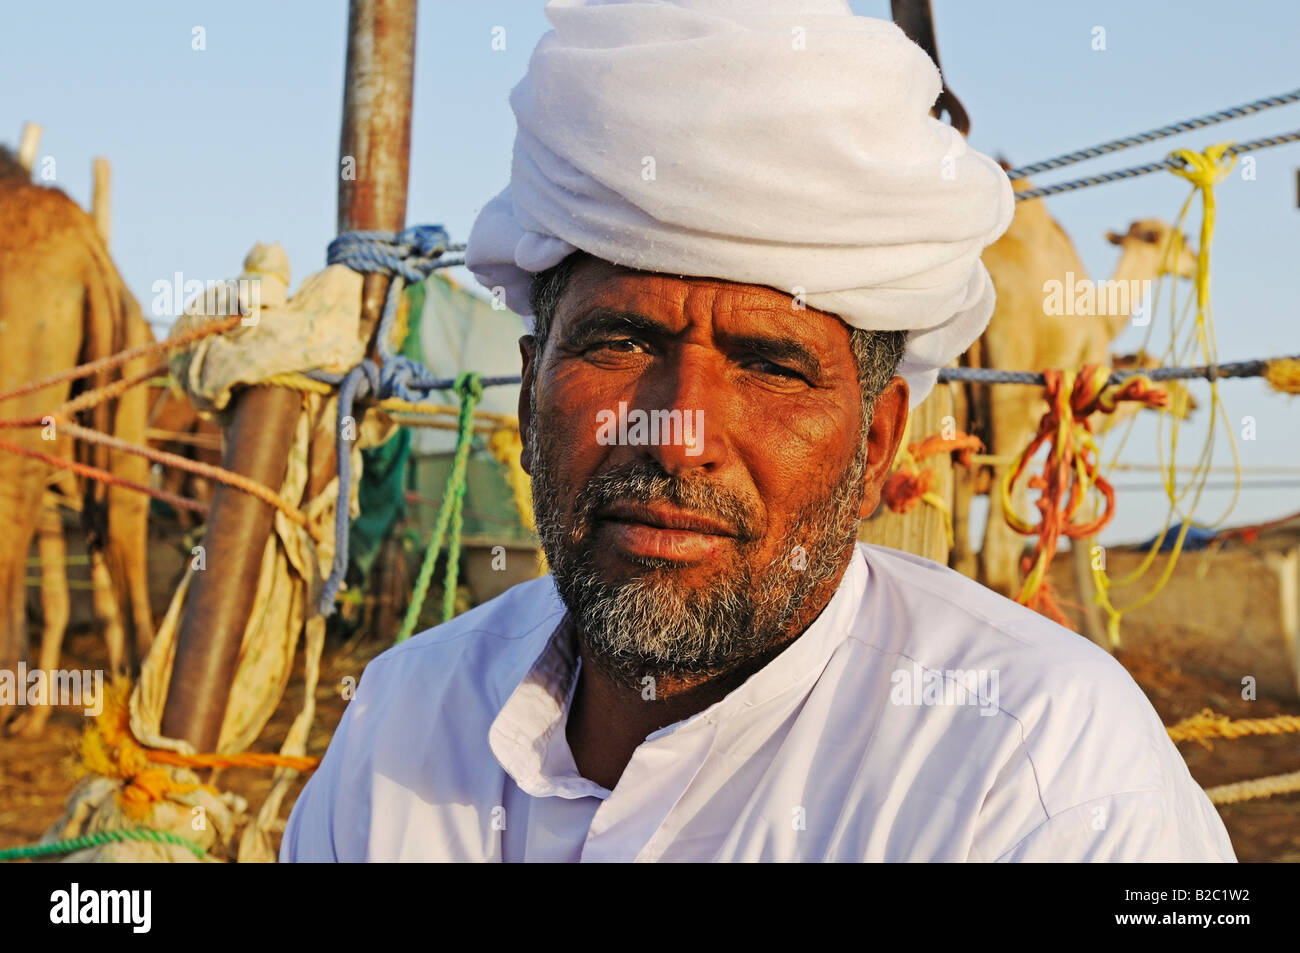 Camel merchant at the camel market, Al Ain, Abu Dhabi, United Arab Emirates, Asia Stock Photo